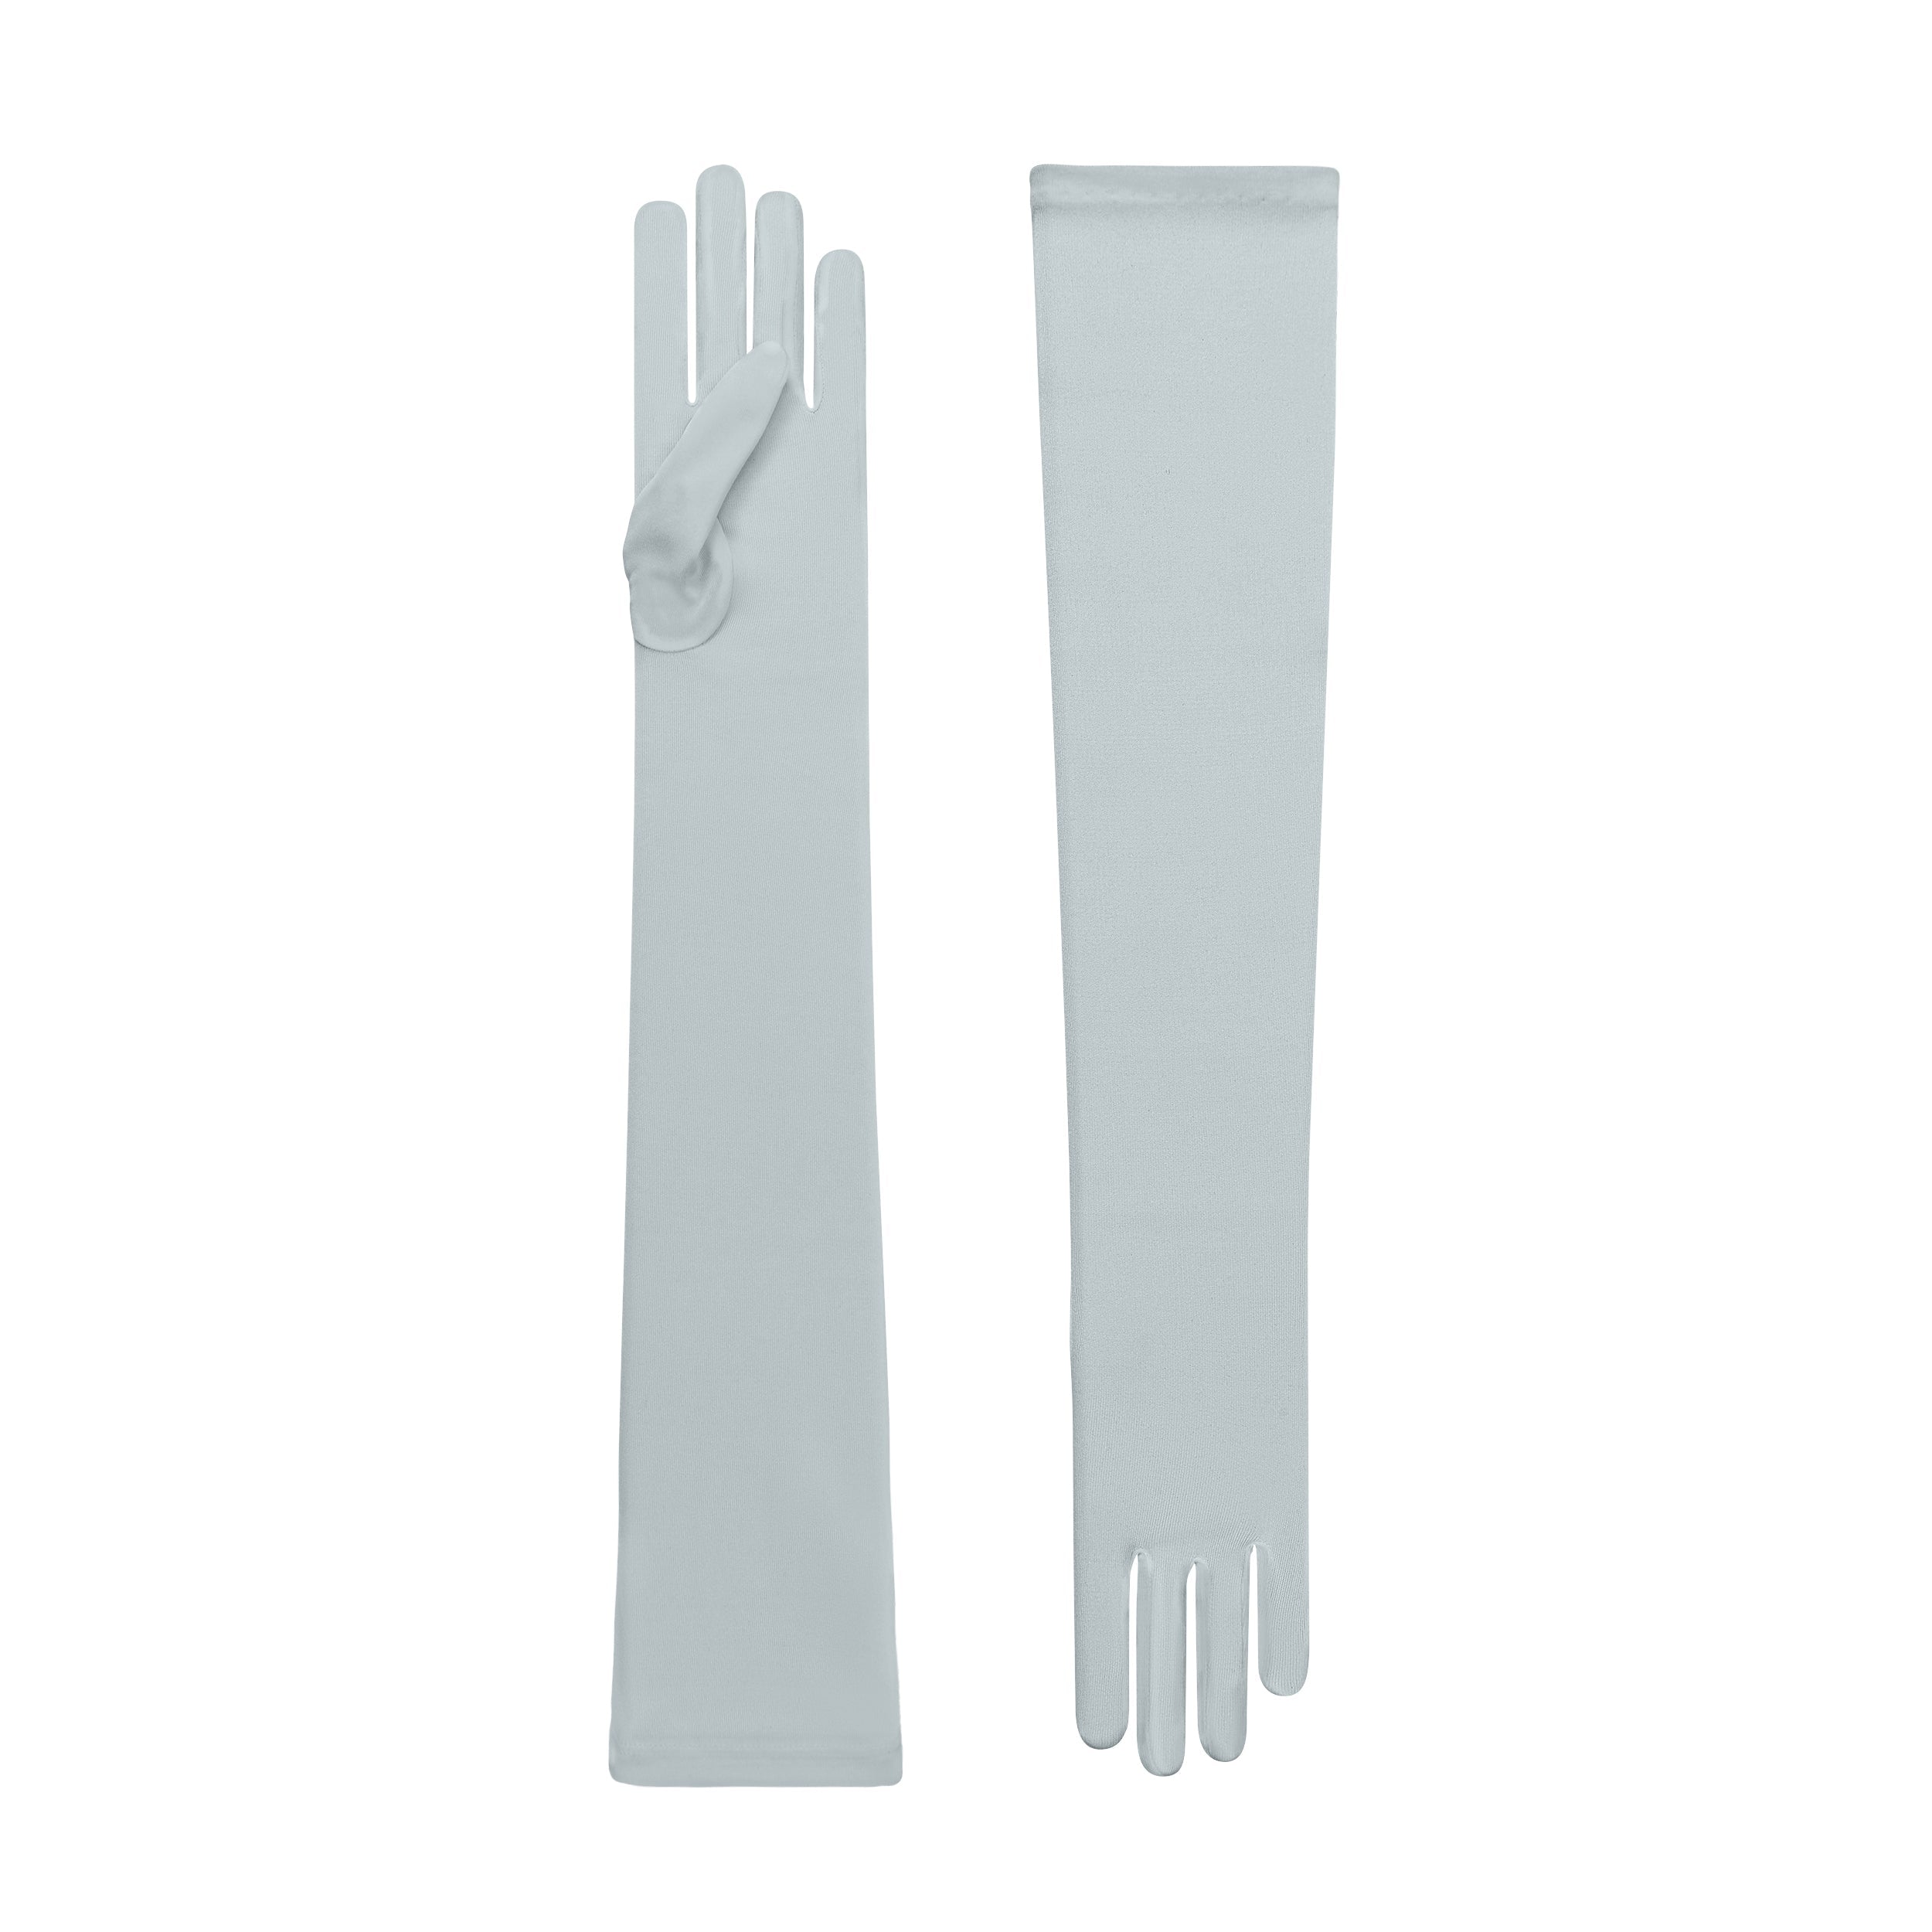 Cornelia James - Blue Silk Opera Gloves - Phoebe - Size Large (8) - Made to Measure Evening Gloves by Cornelia James